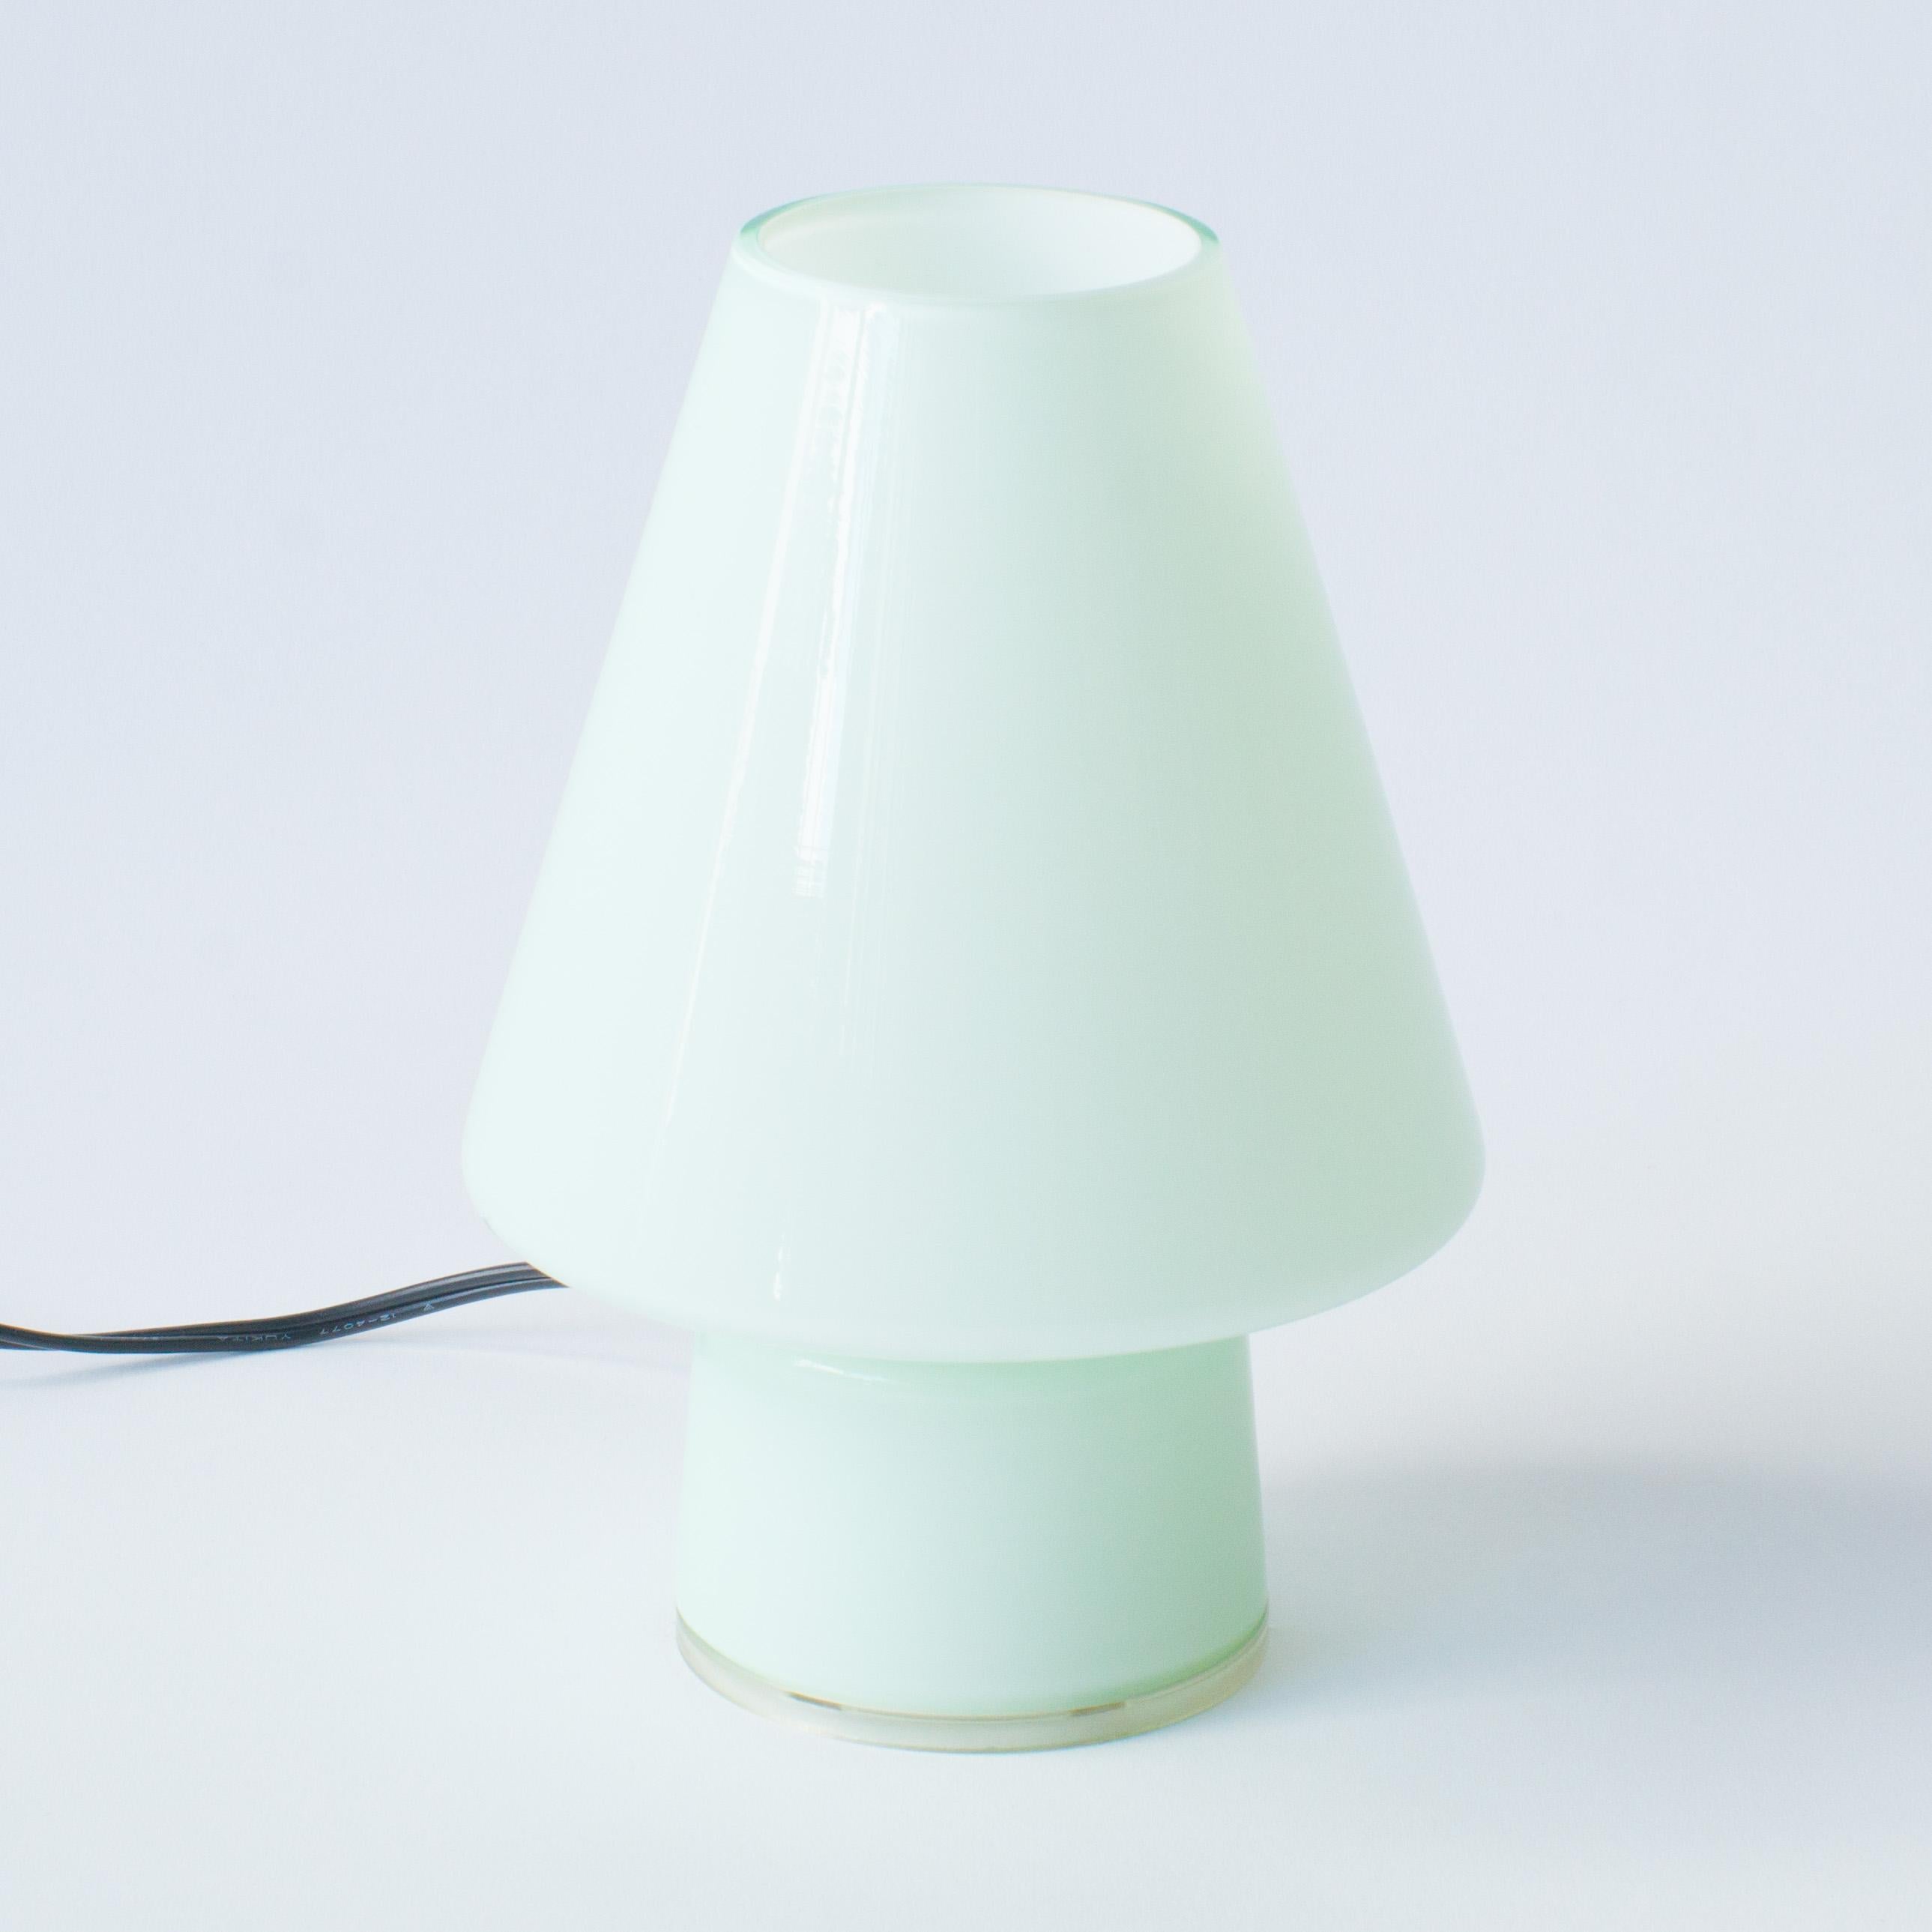 Alessandro Mendini Bibi lamp for Artemide. Color is pale green.
Working with 100-240V. E17 light bulb.